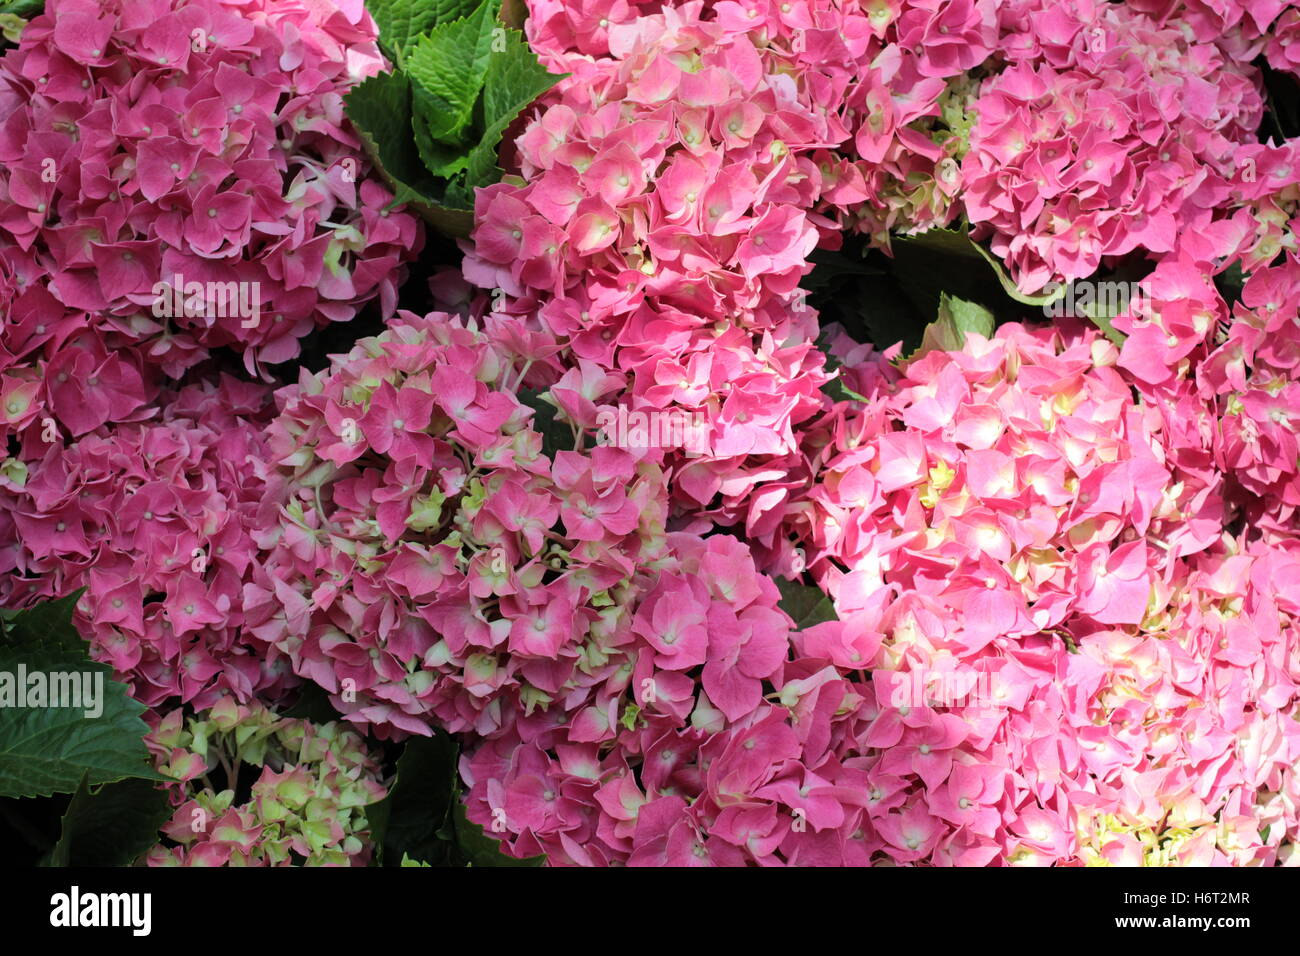 Pink Calandiva flowers Stock Photo